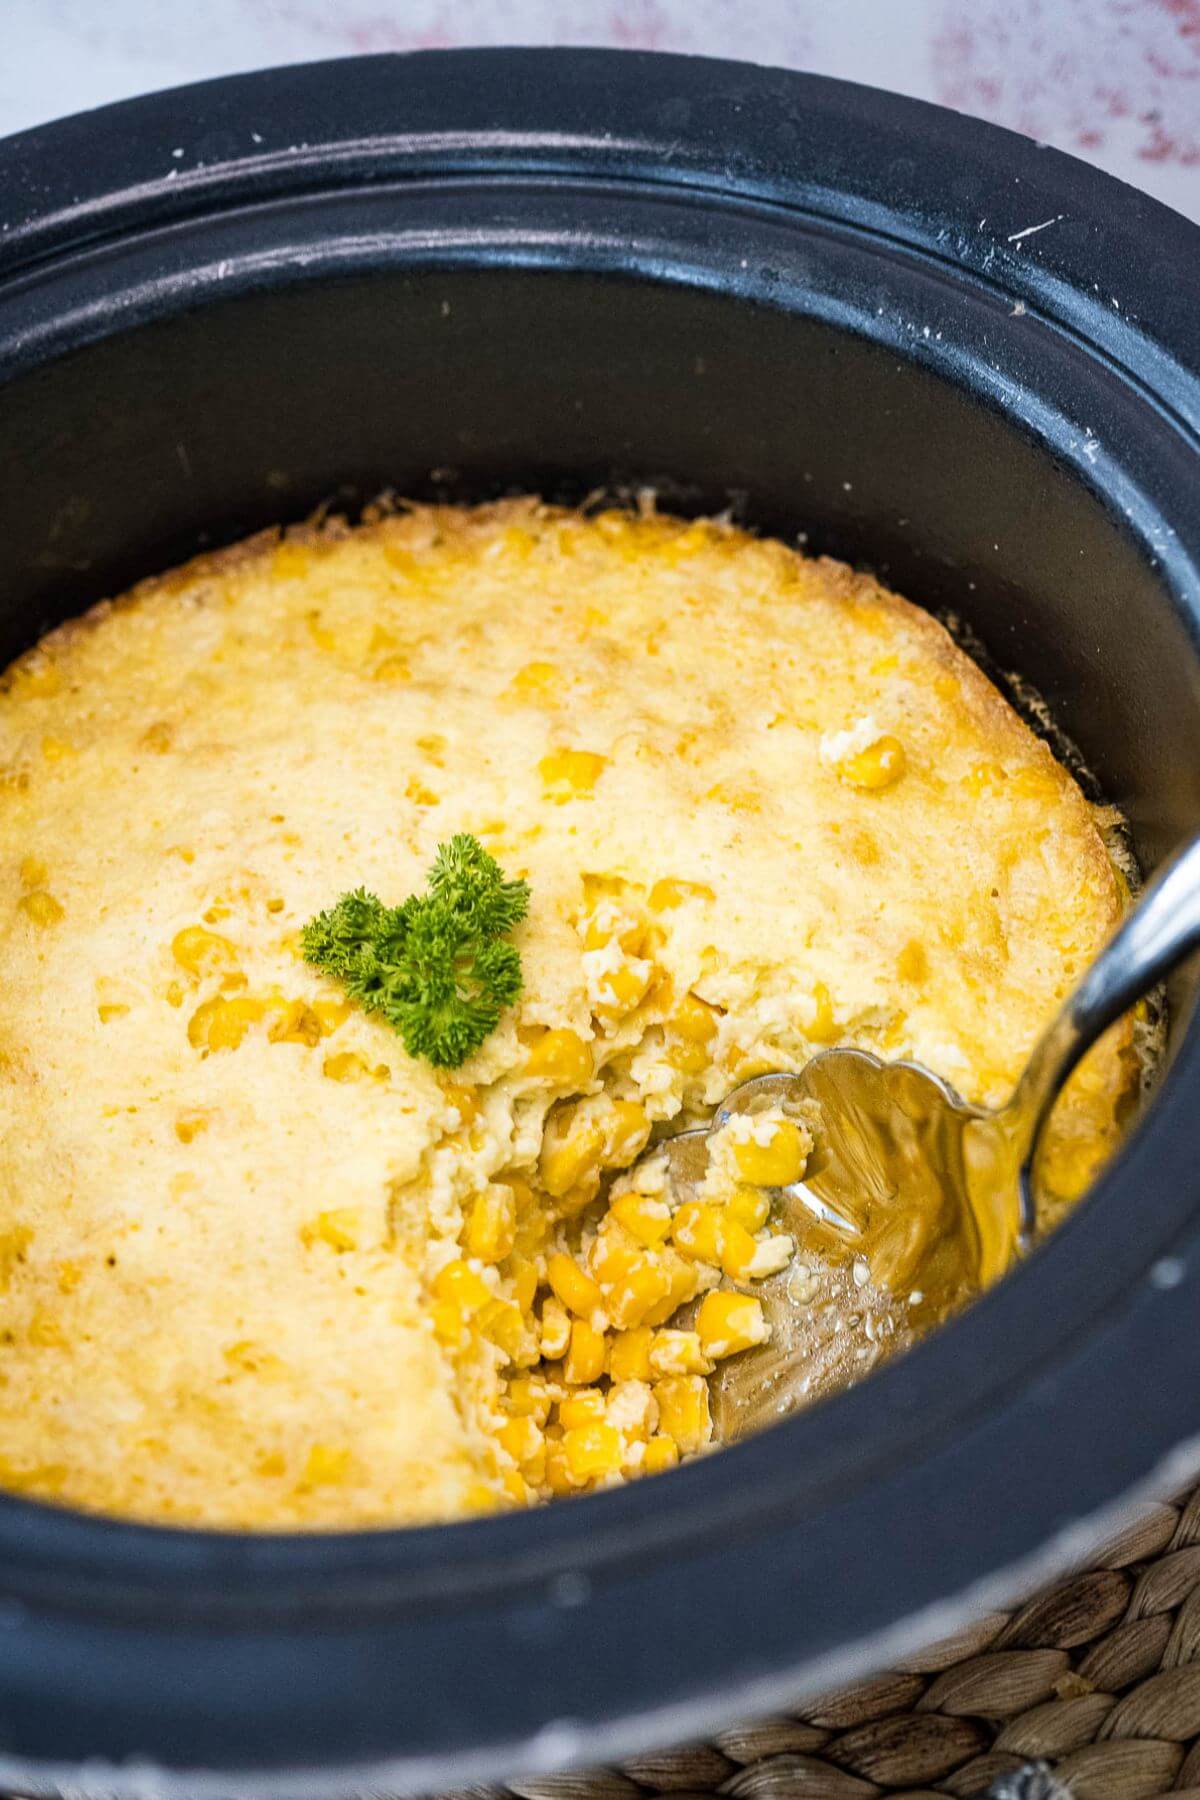 Spoon taking out serving of crock pot corn casserole. 